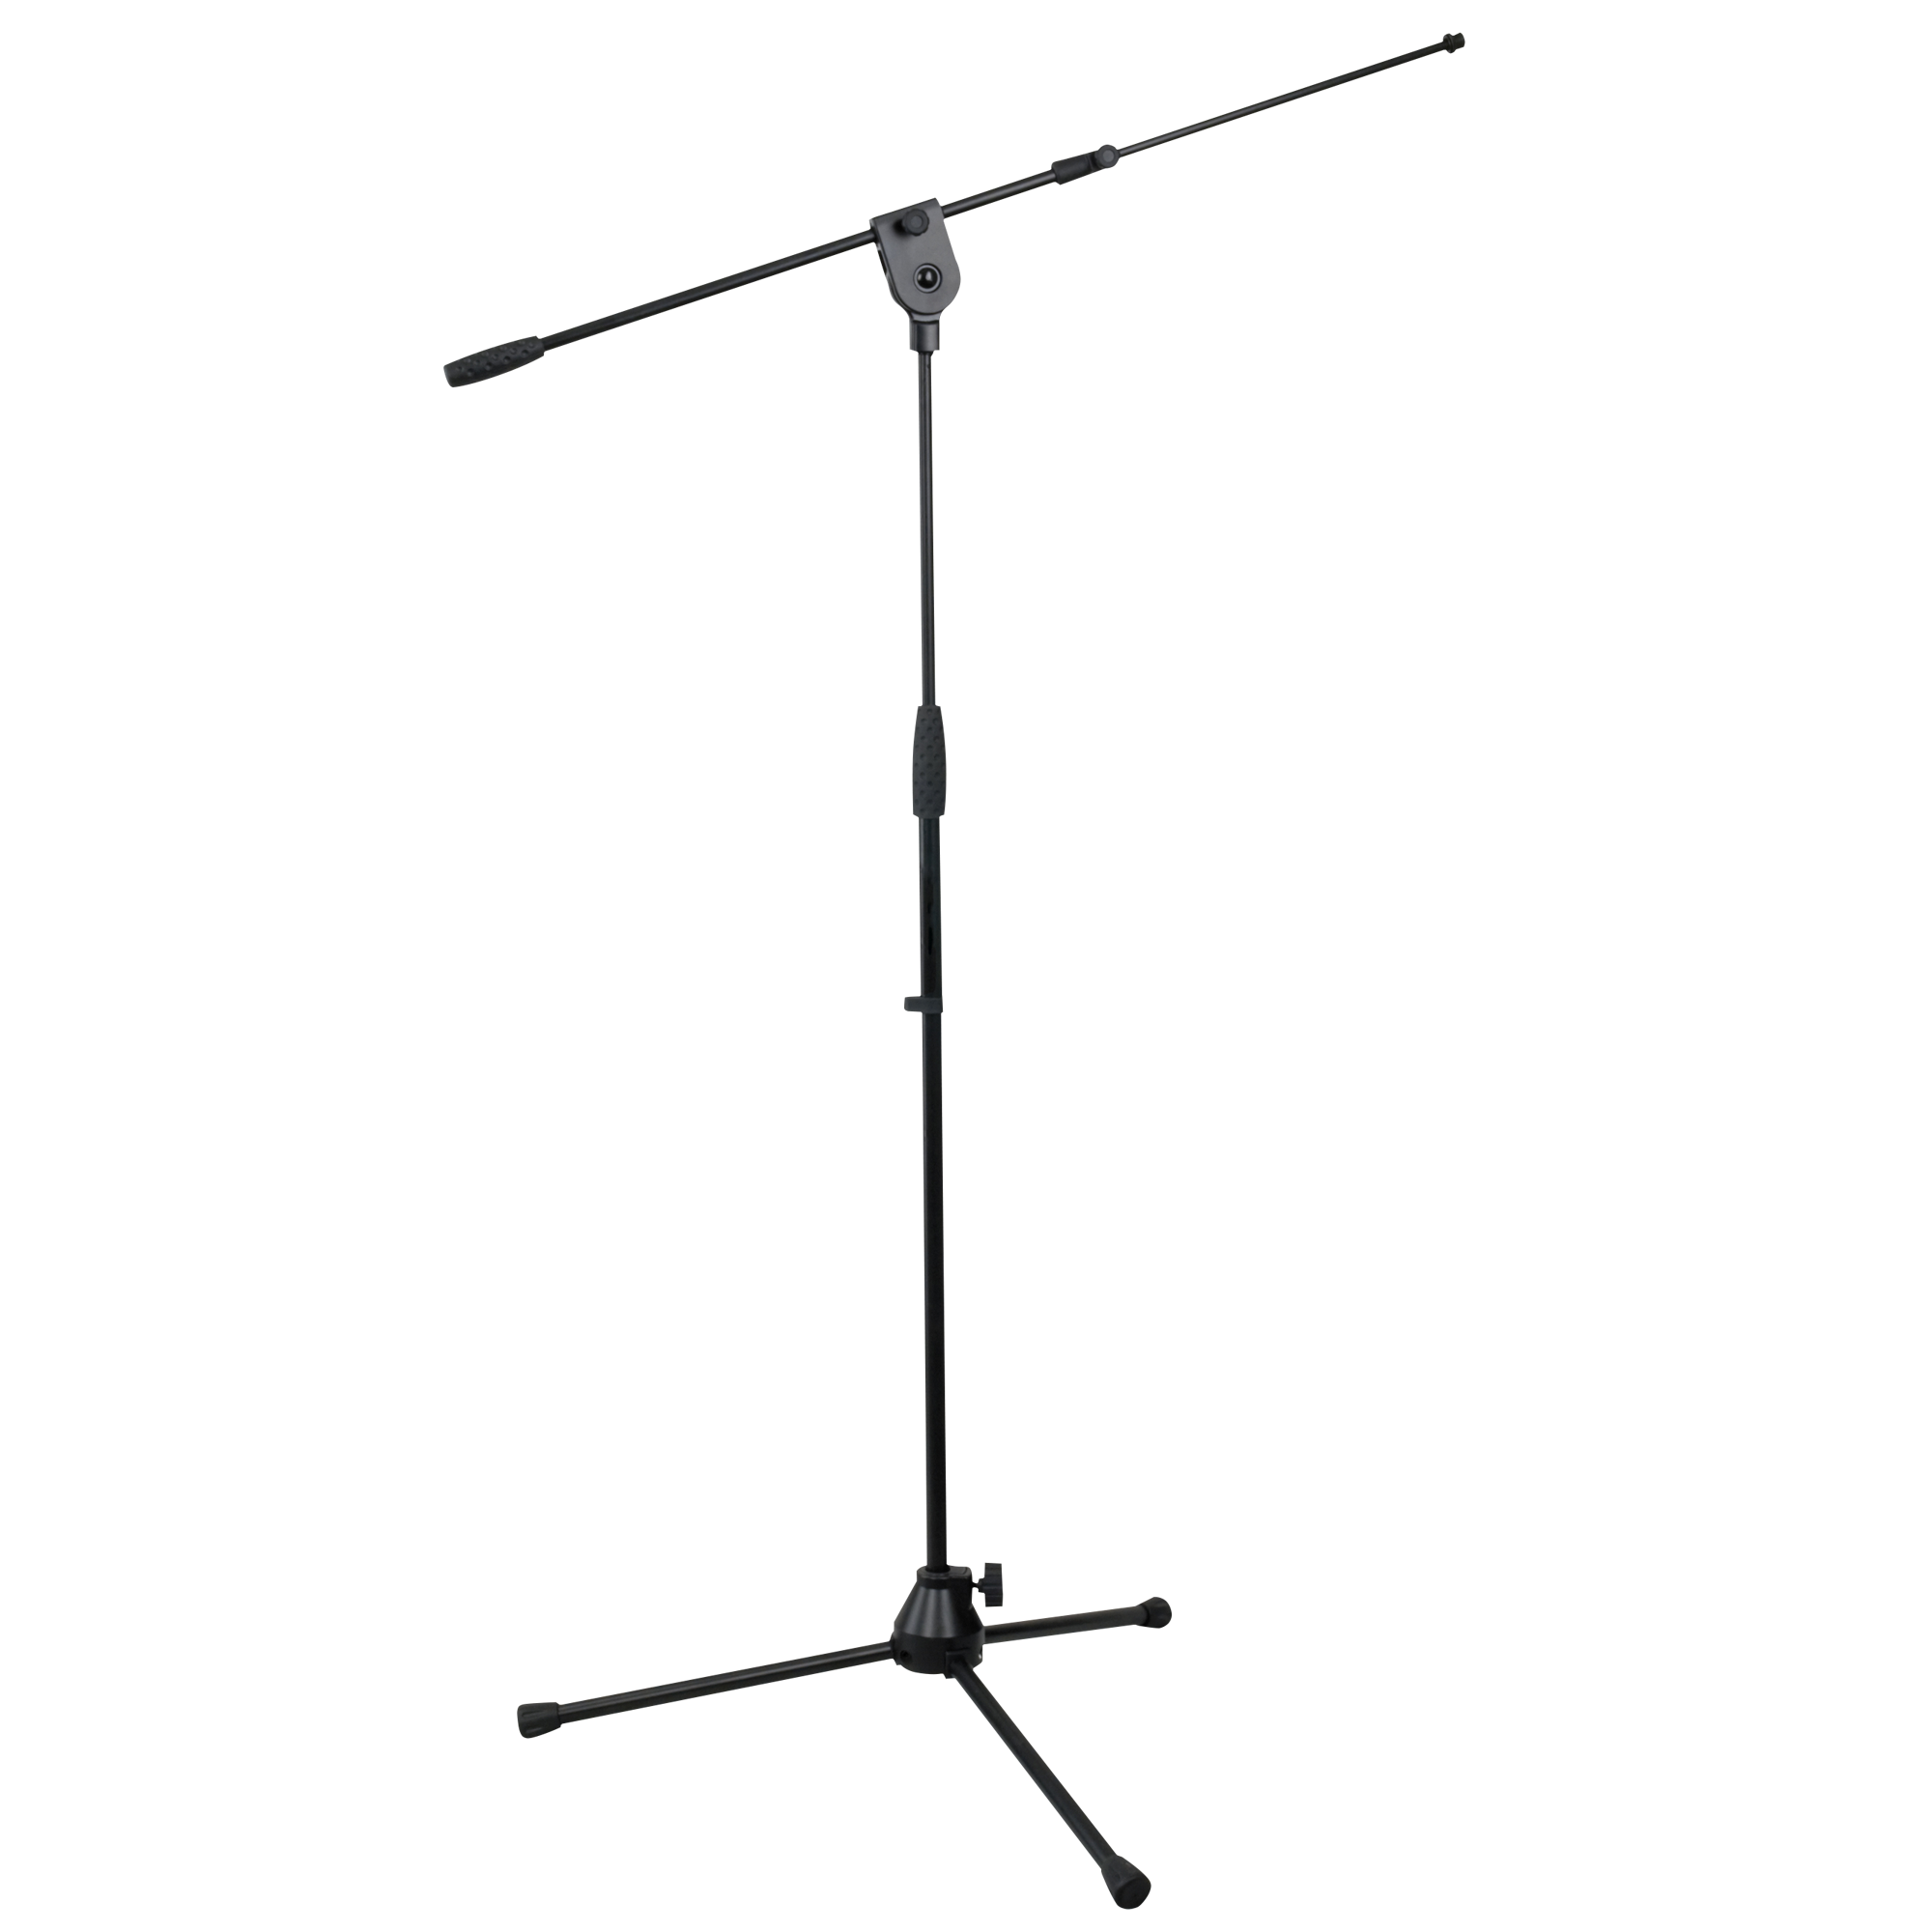 Showgear Microphone Stand - Pro 850-1430 mm, Basisteil aus Metall